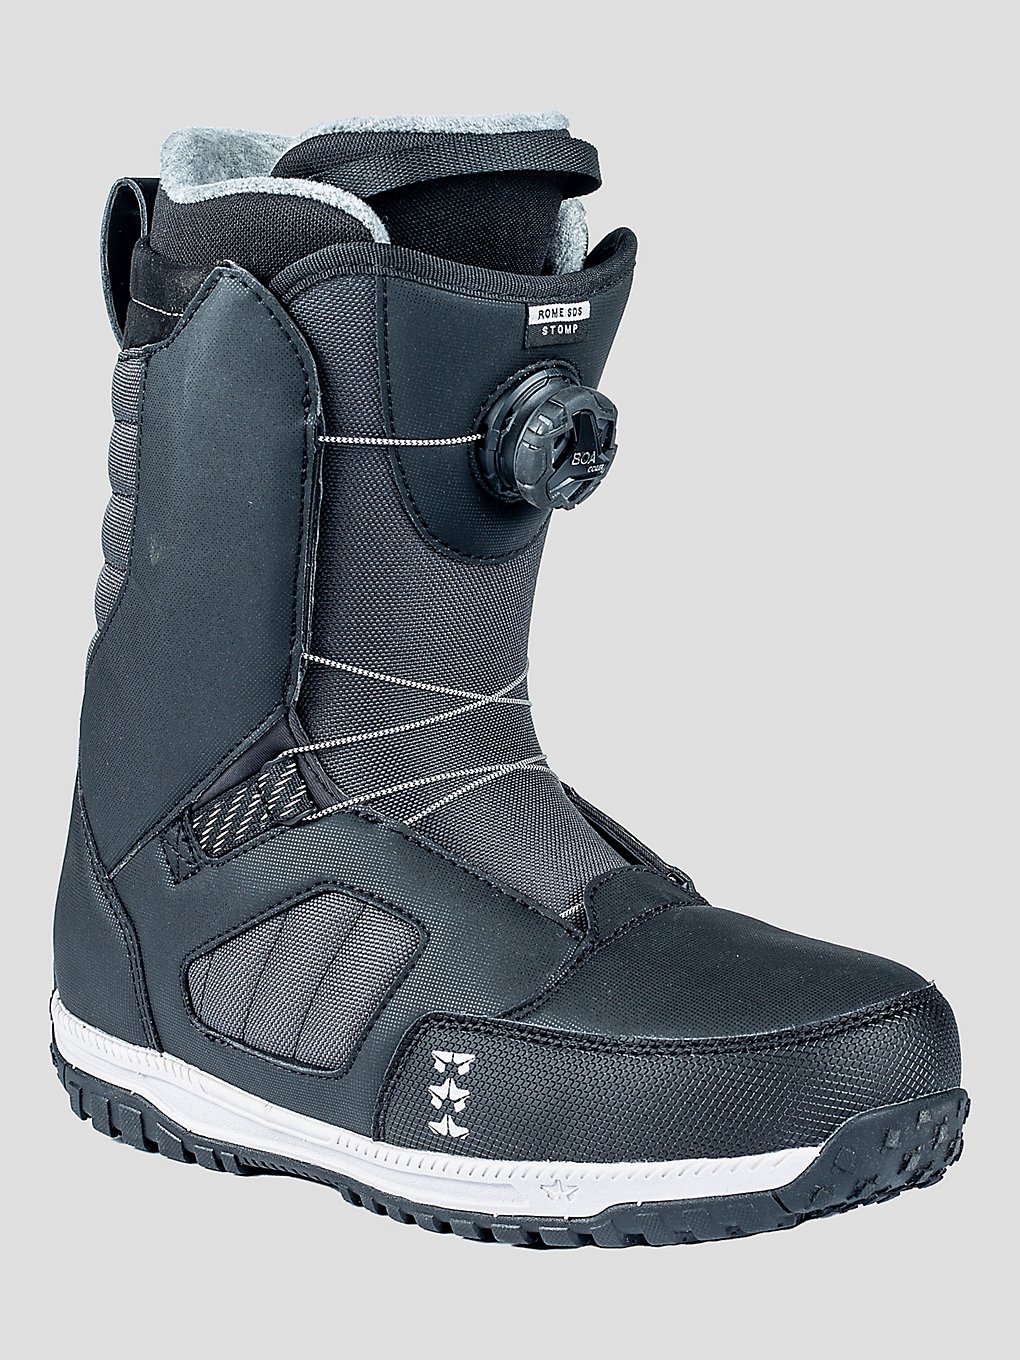 Rome Stomp BOA Snowboard-Boots black kaufen